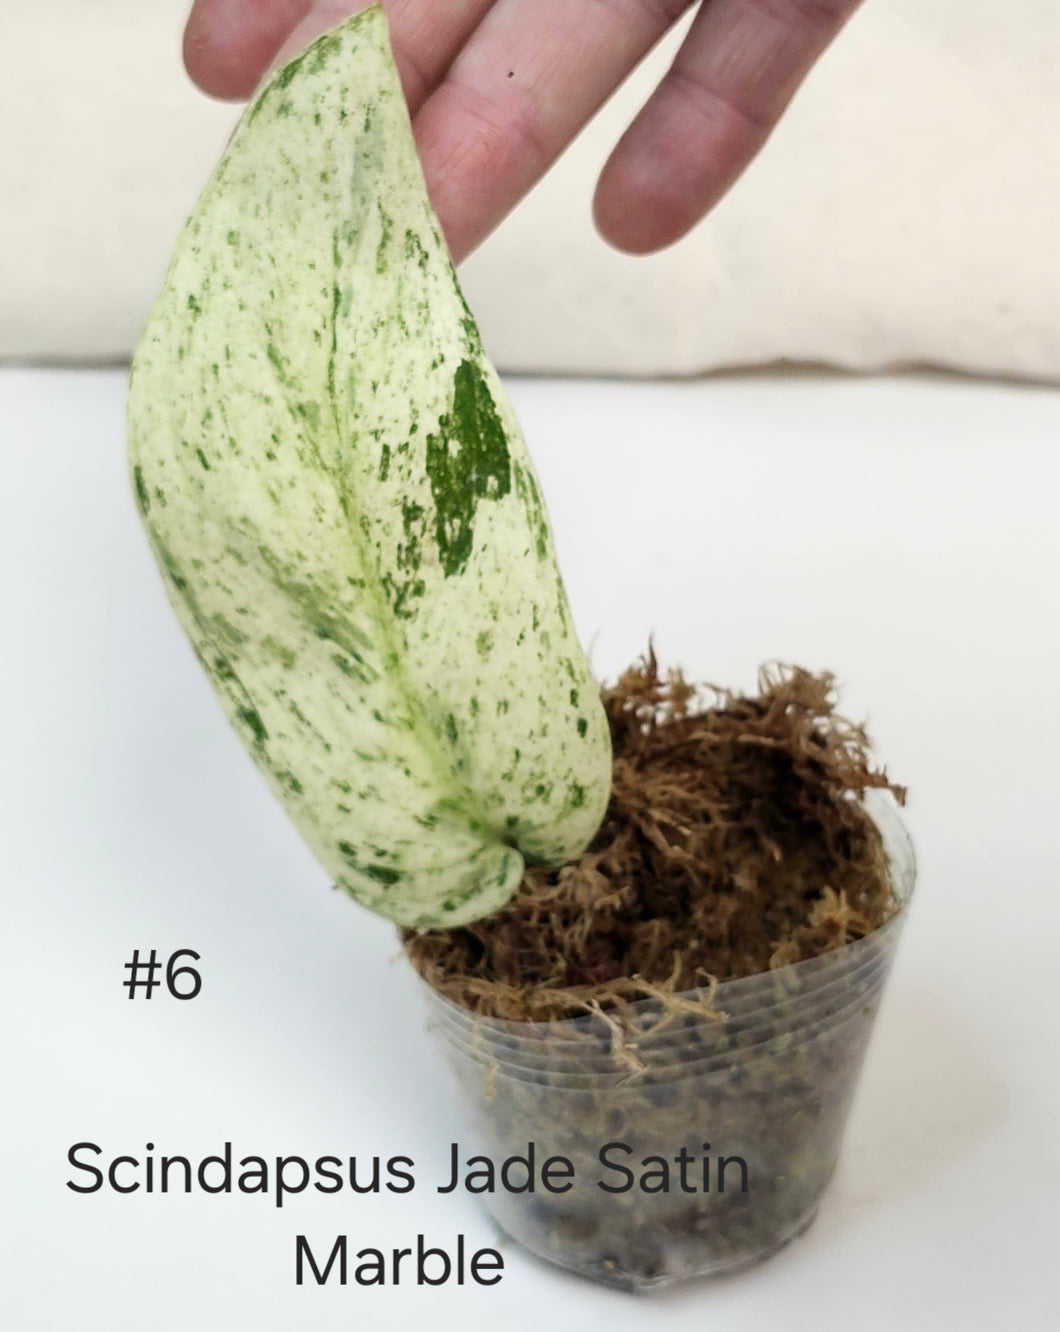 Scindapsus jade satin marble #6